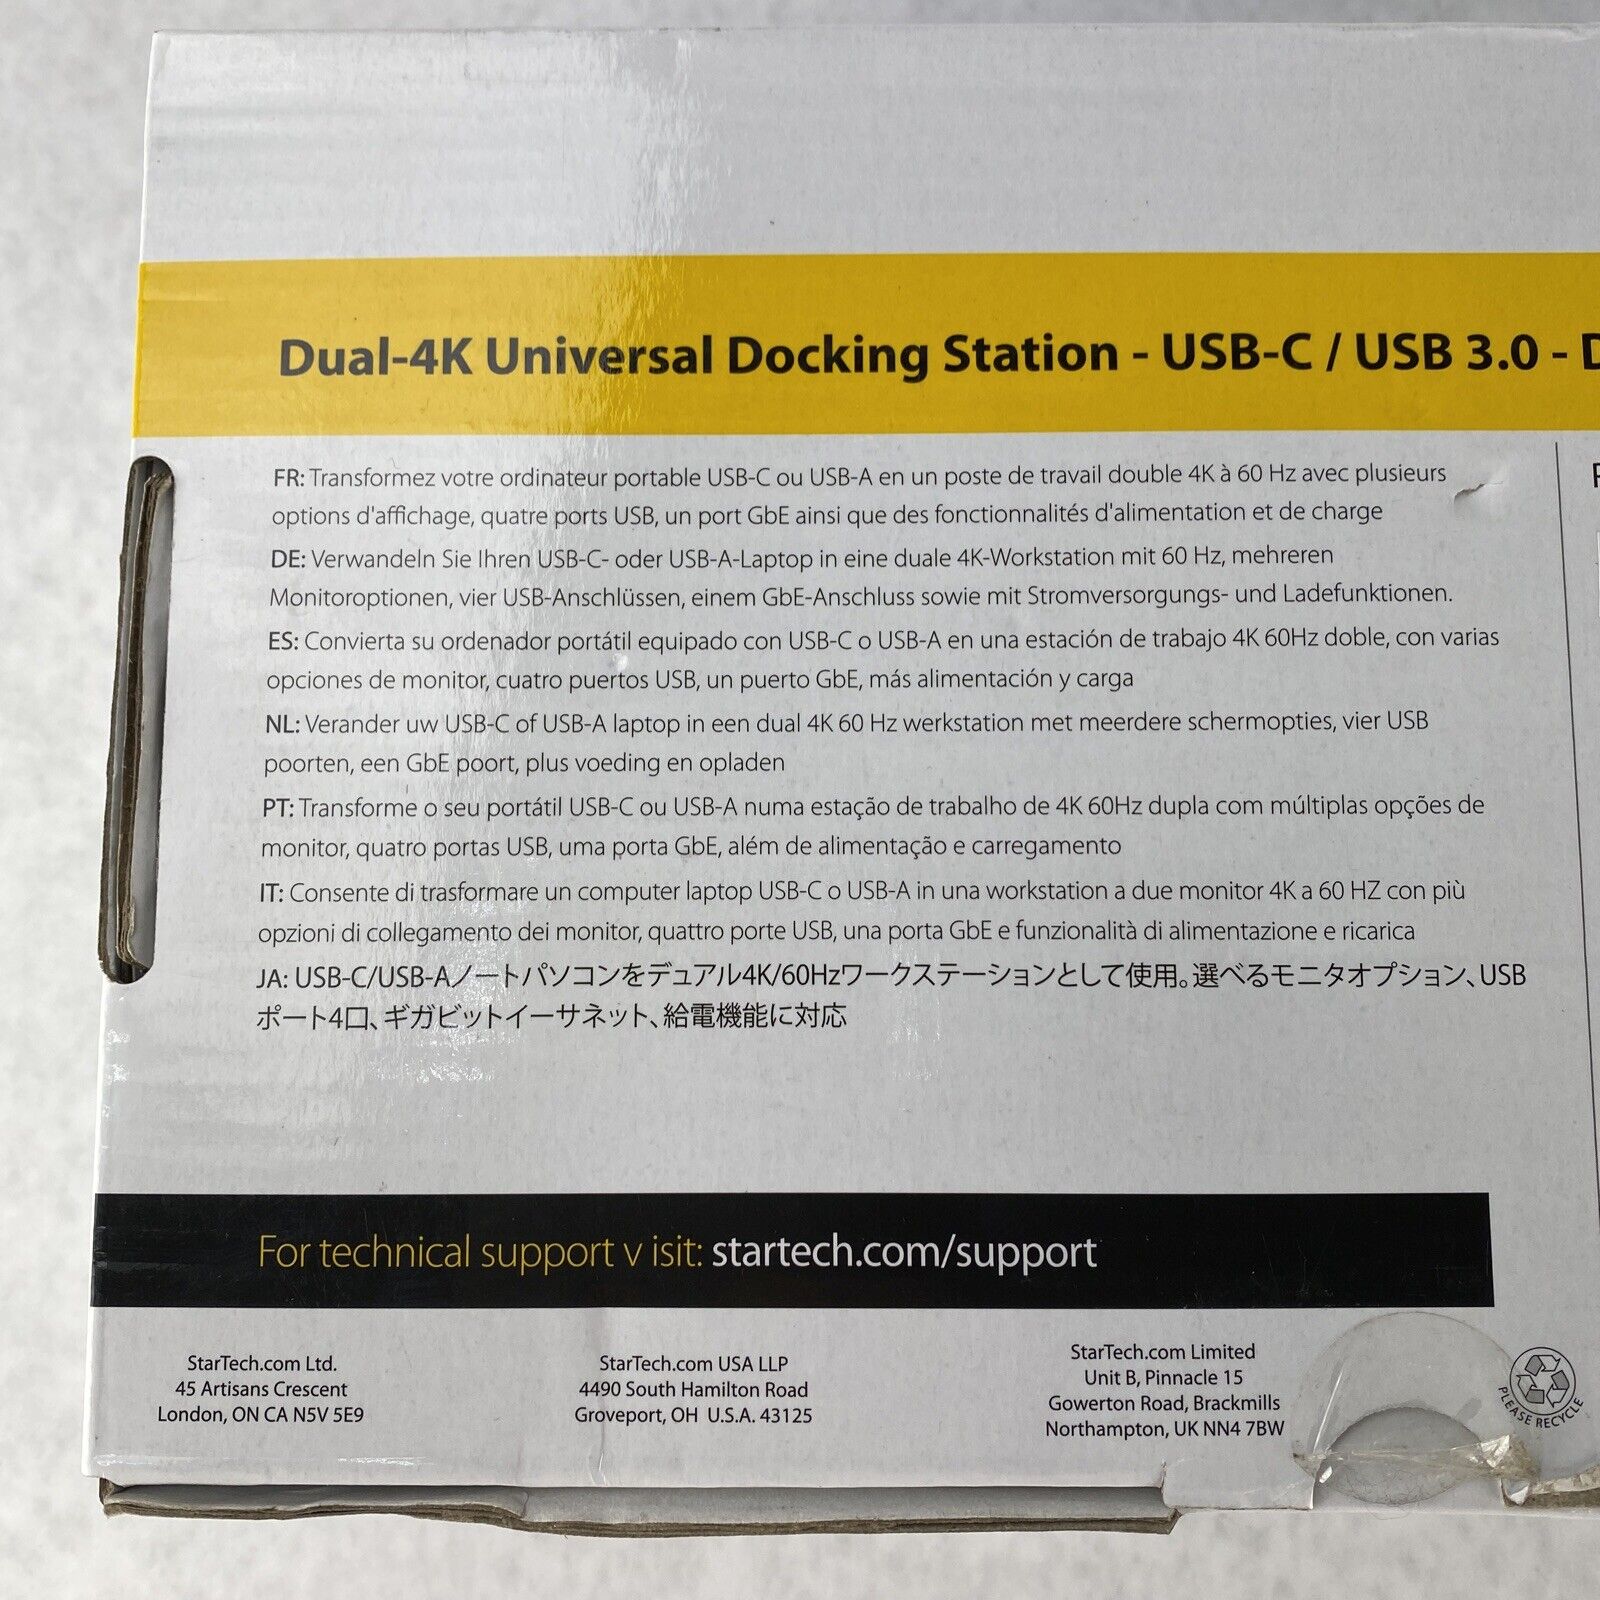 StarTech DK30C2DPPD Dual 4K Universal Laptop Docking Station USB- C USB 3.0